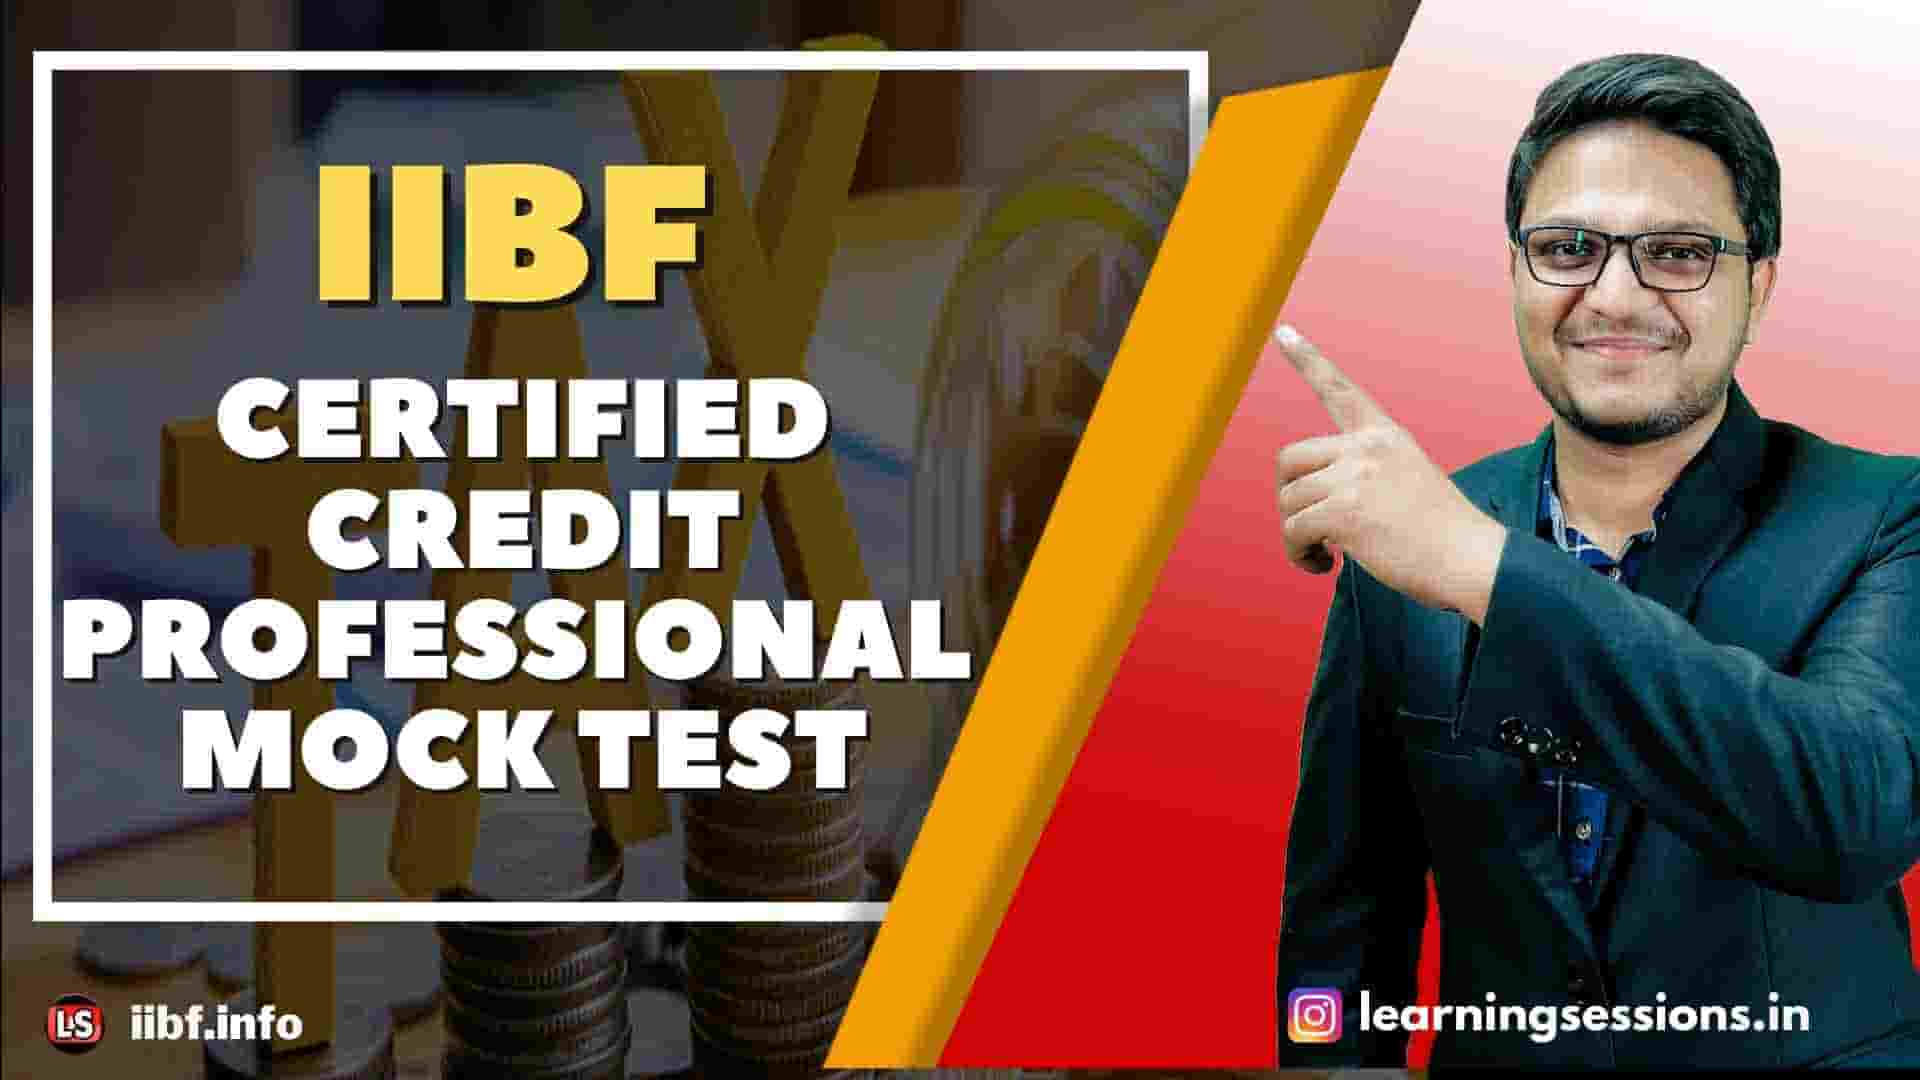 IIBF CCP MOCK TEST - CERTIFIED CREDIT PROFESSIONAL 2022